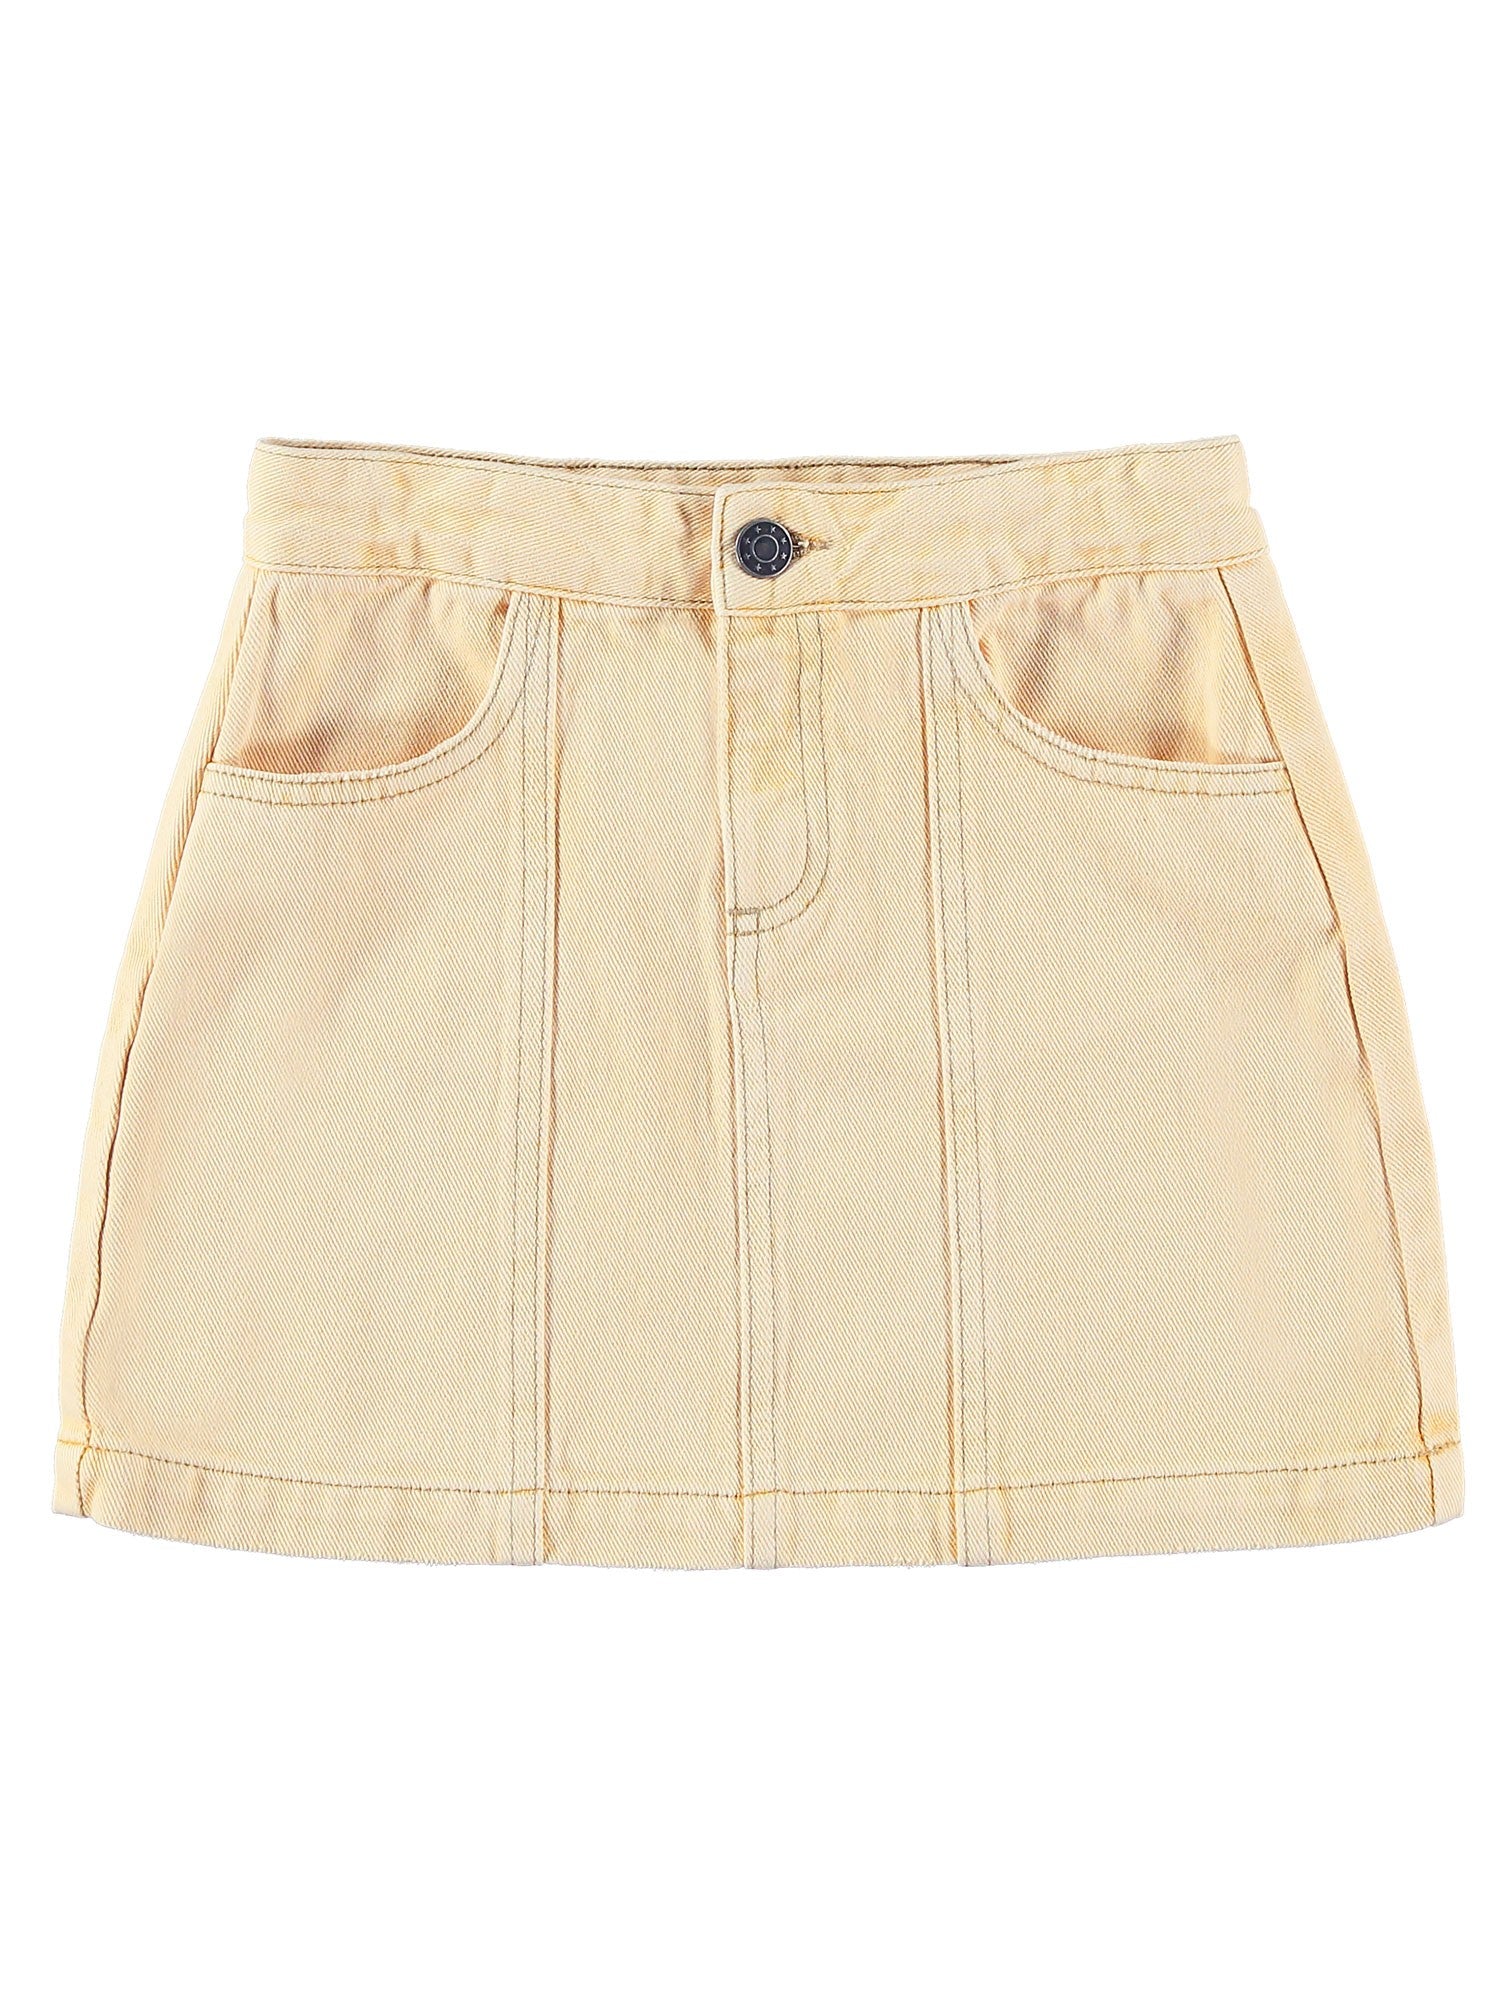 Tocoto Vintage - twill skirt - yellow